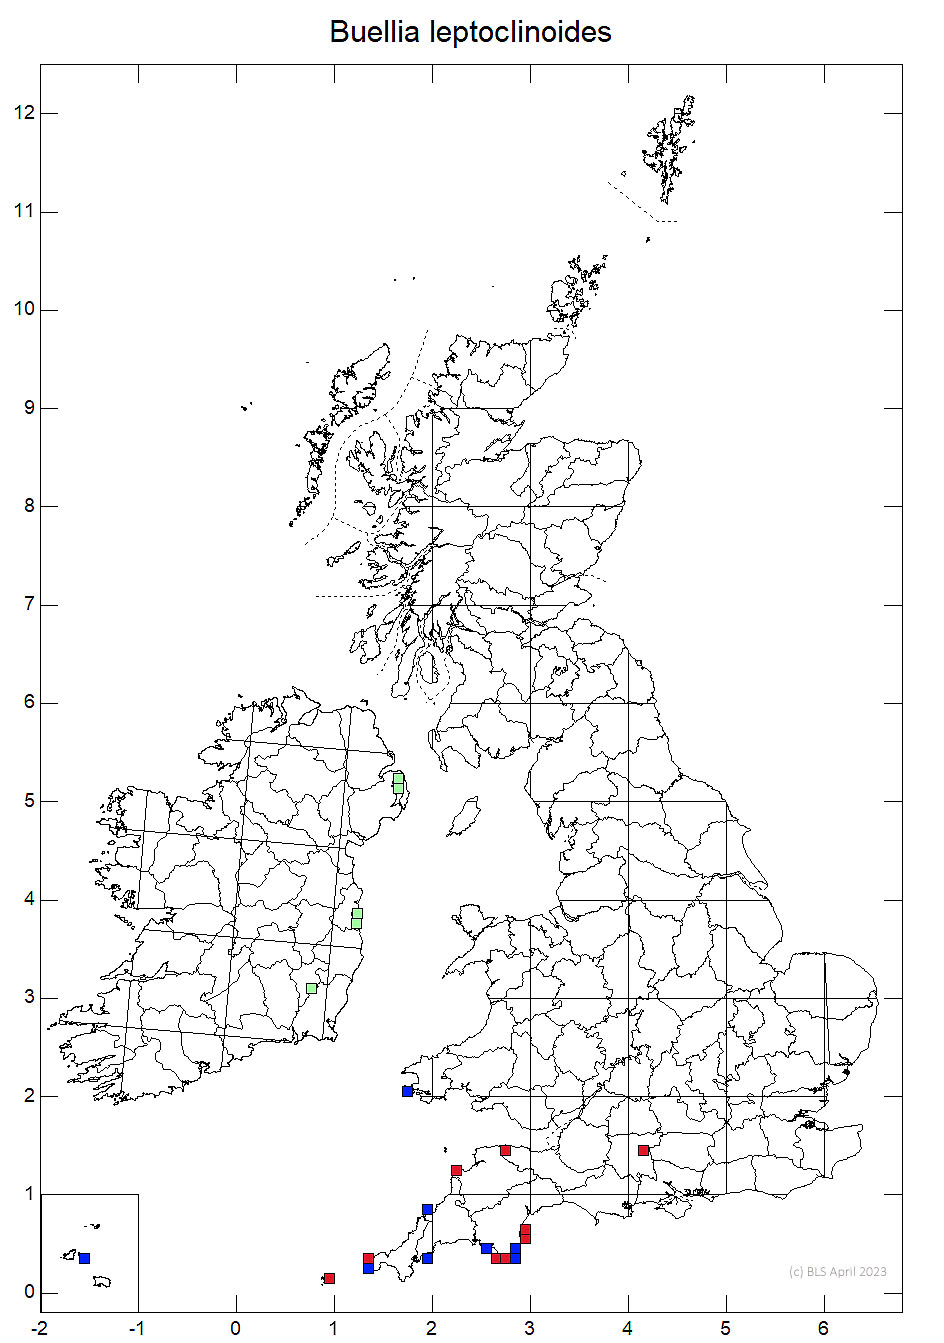 Buellia leptoclinoides 10km sq distribution map